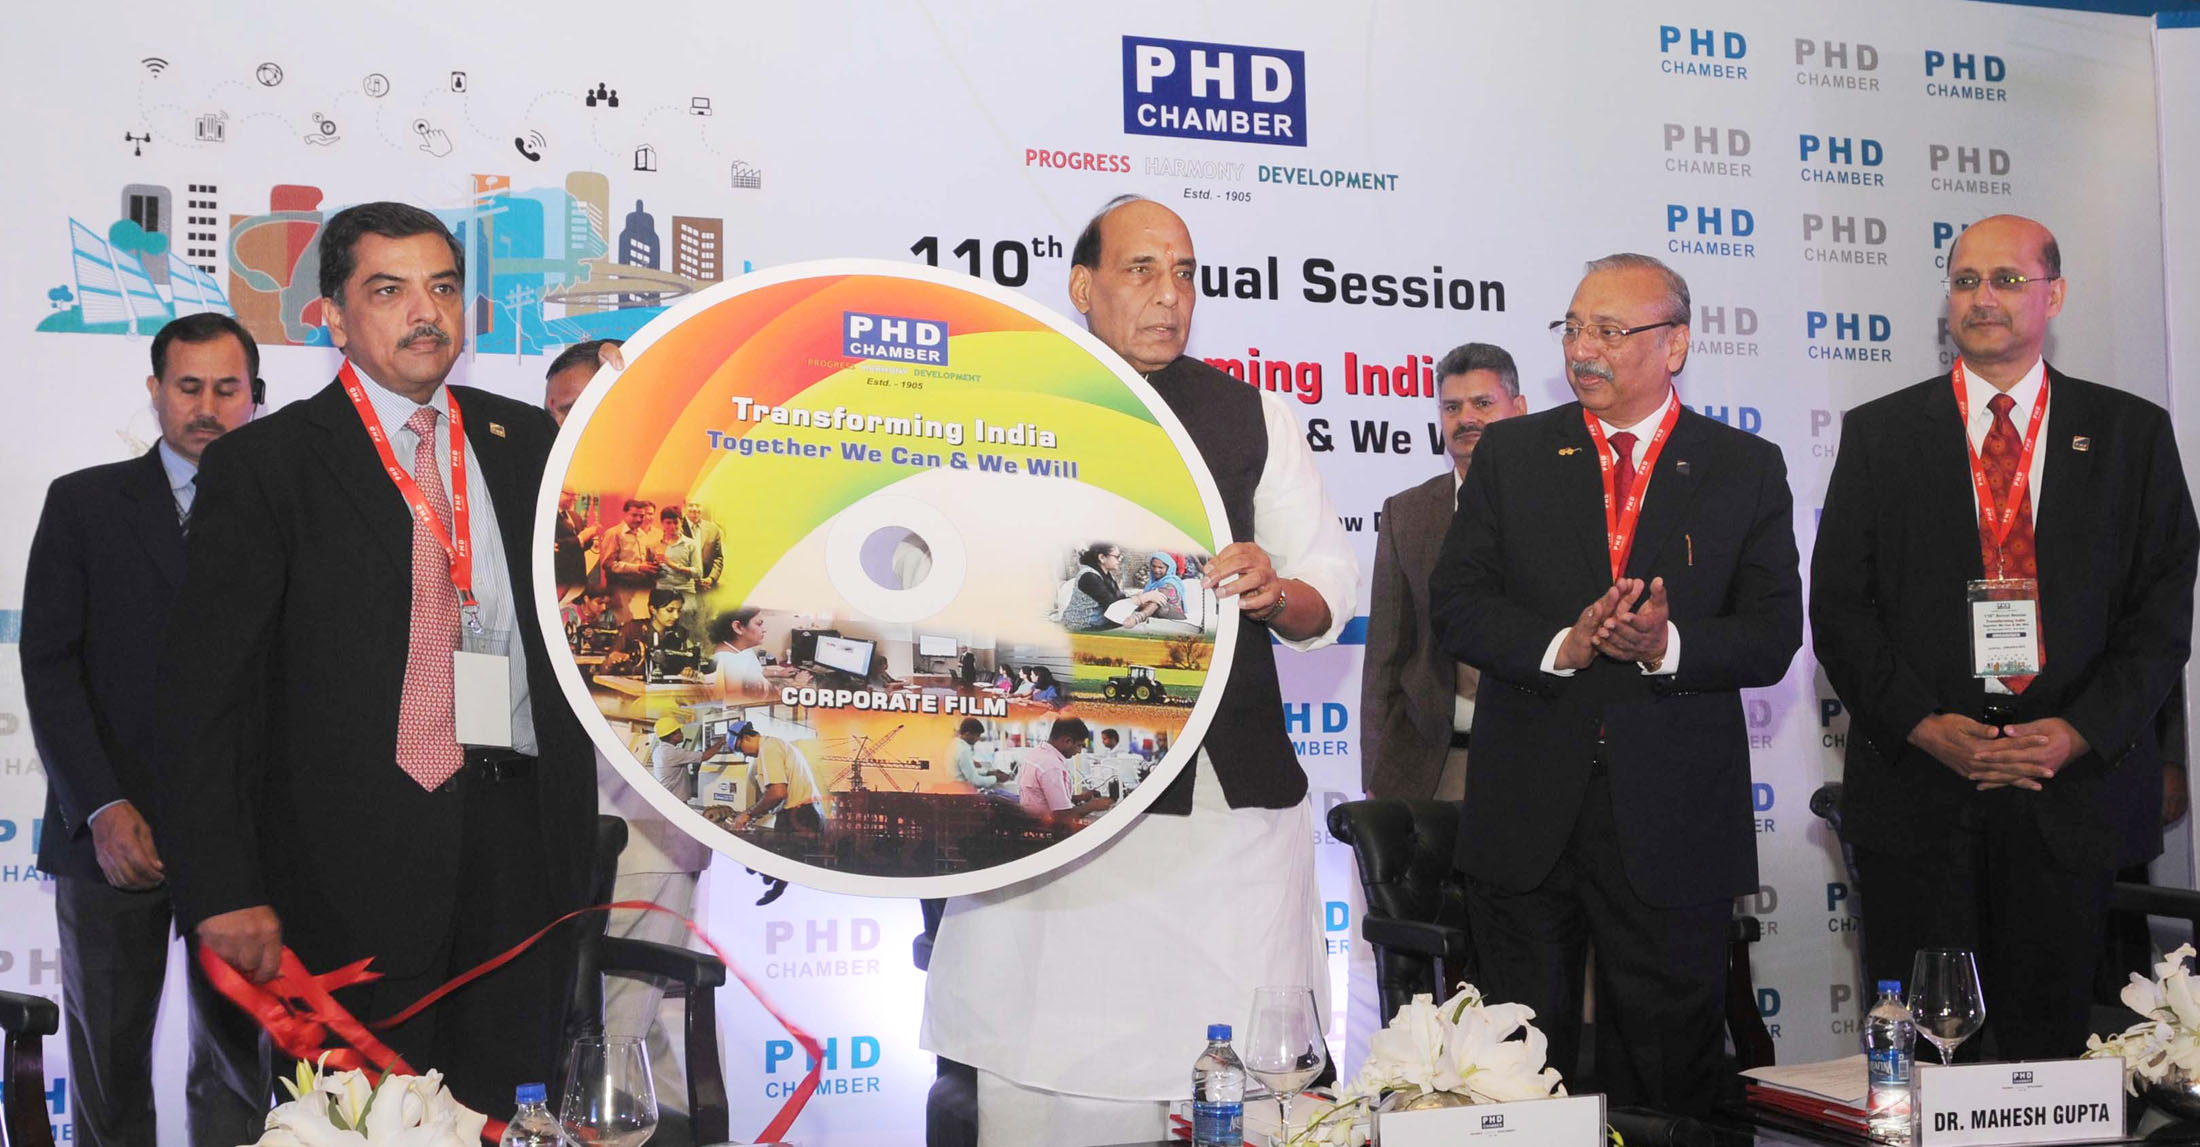 The Union Home Minister, Shri Rajnath Singh launching the PHDs Audio-Visual film, at the inauguration of the 110th Annual Session of the PHD Chamber and PHD Annual Awards for Excellence  2015 function, in New Delhi on November 28, 2015.